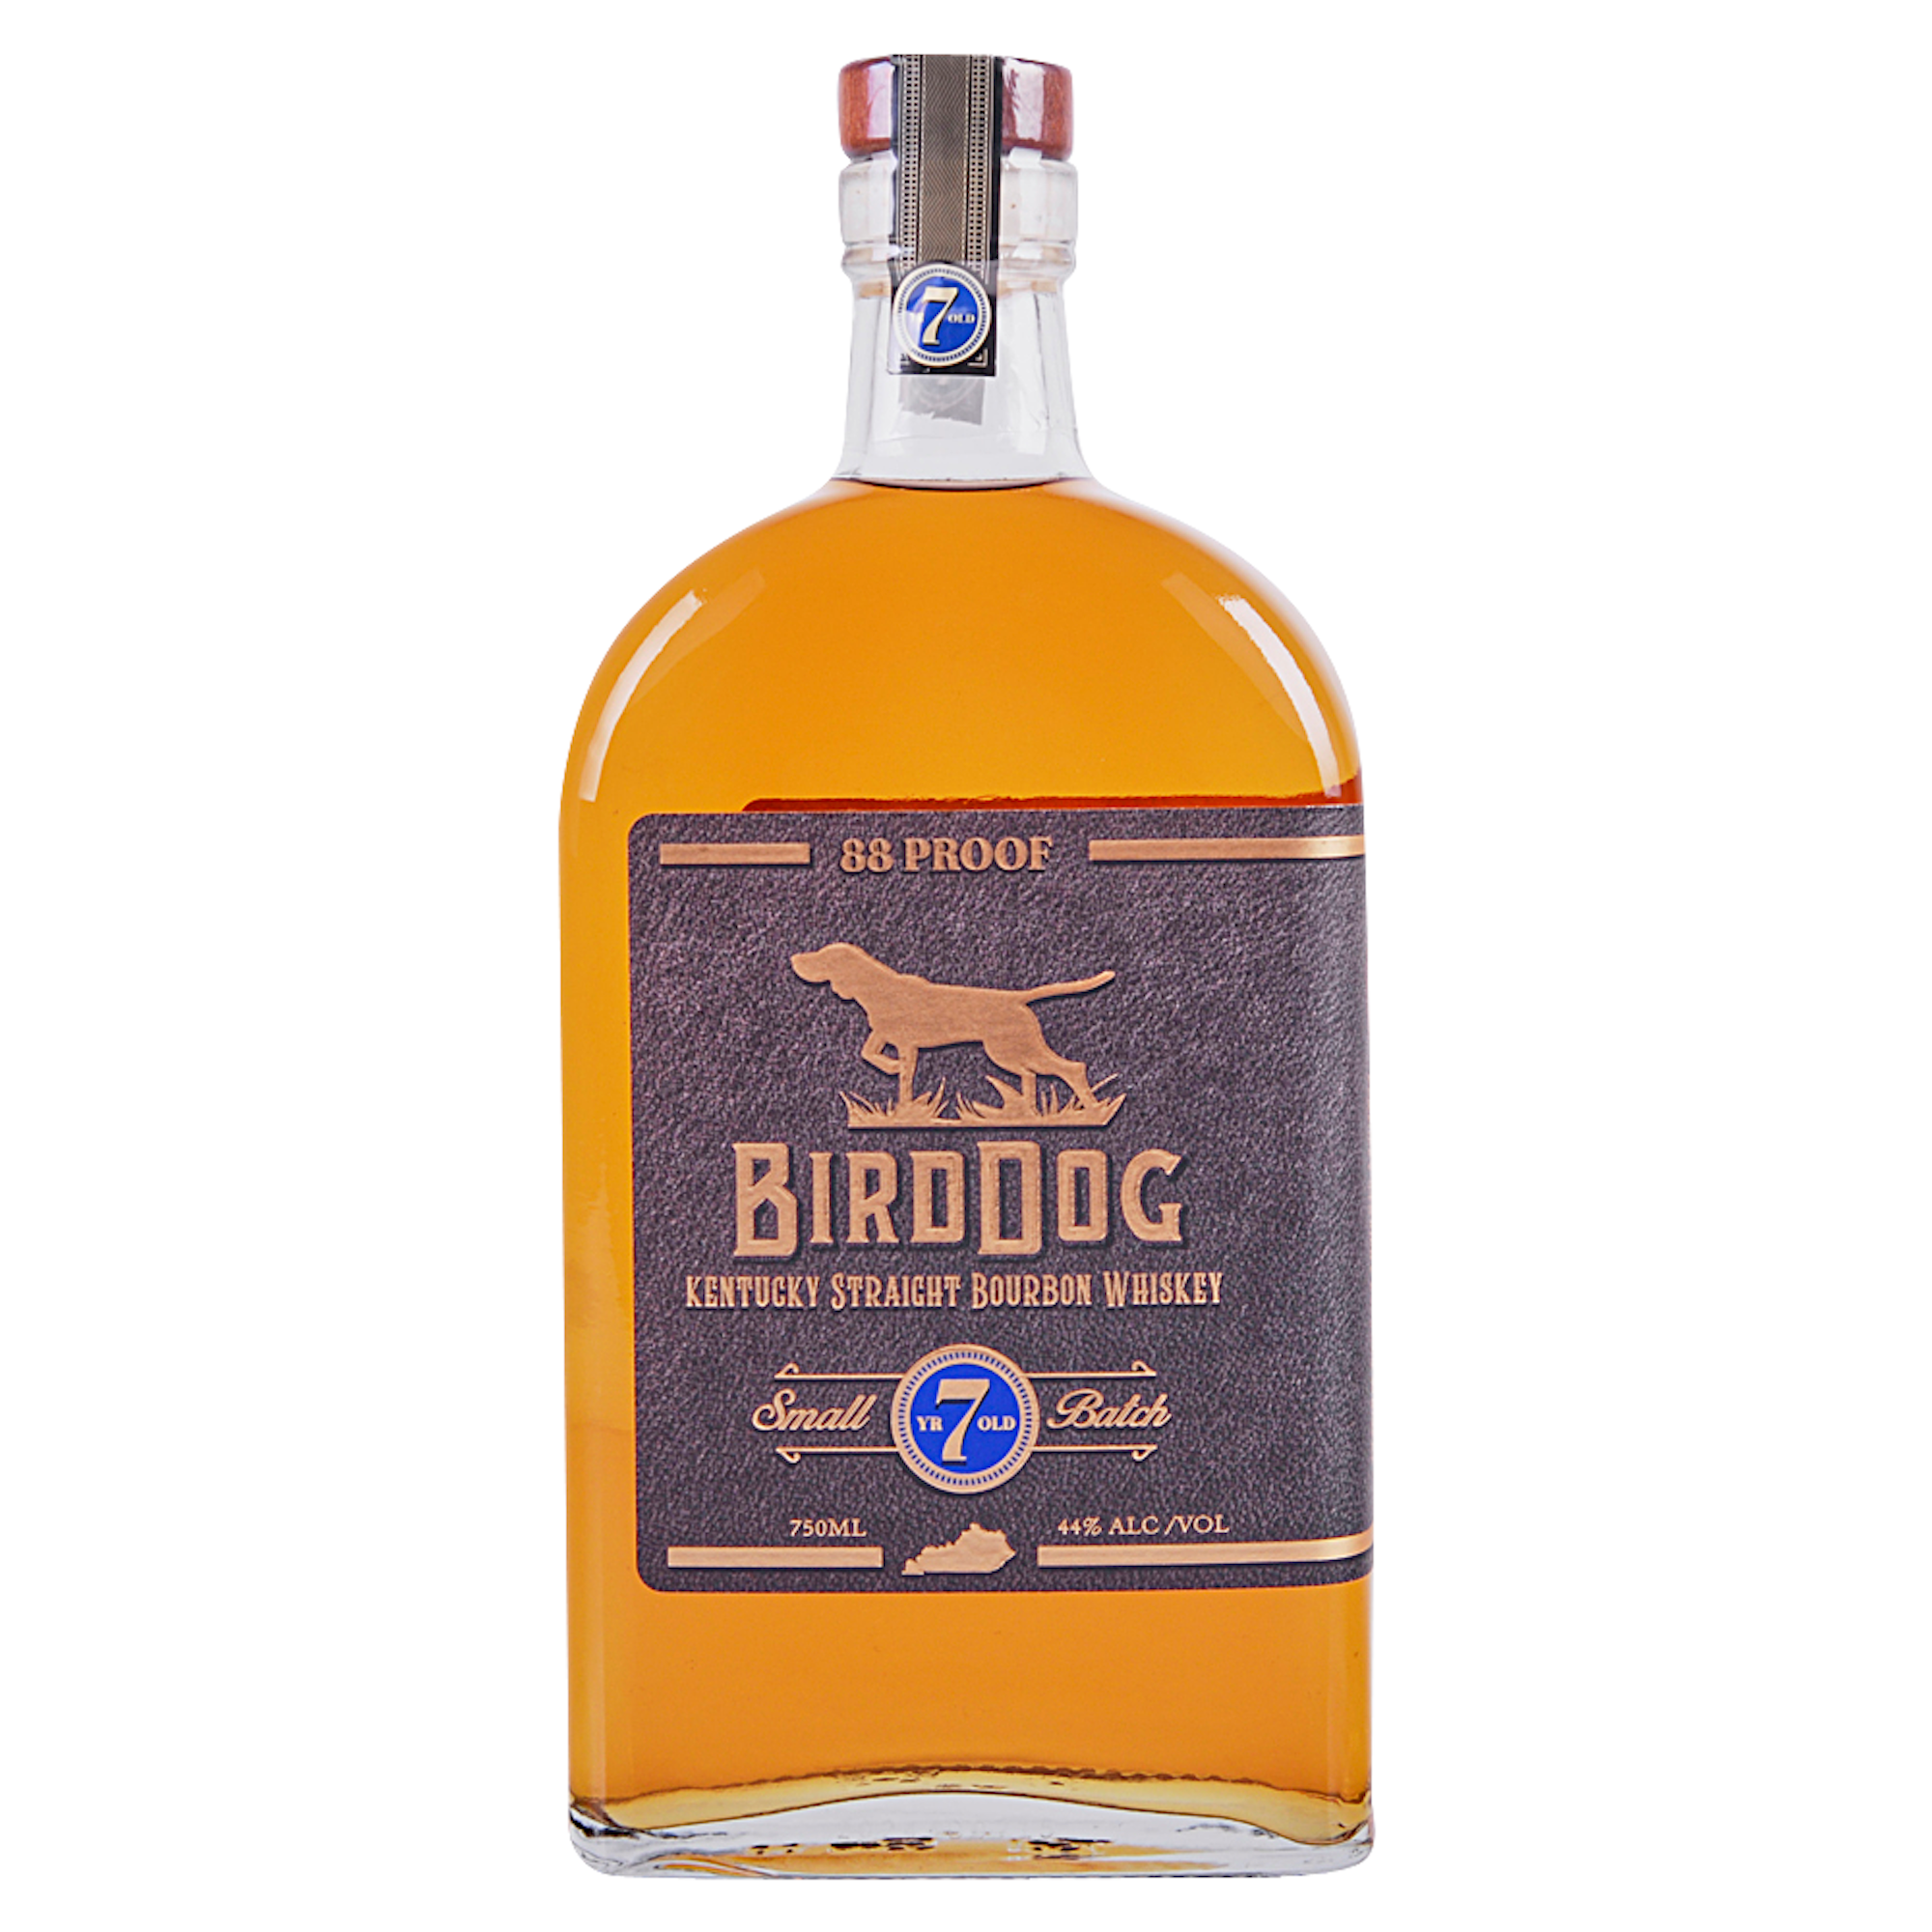 Bird Dog 7 Year Bourbon Whiskey